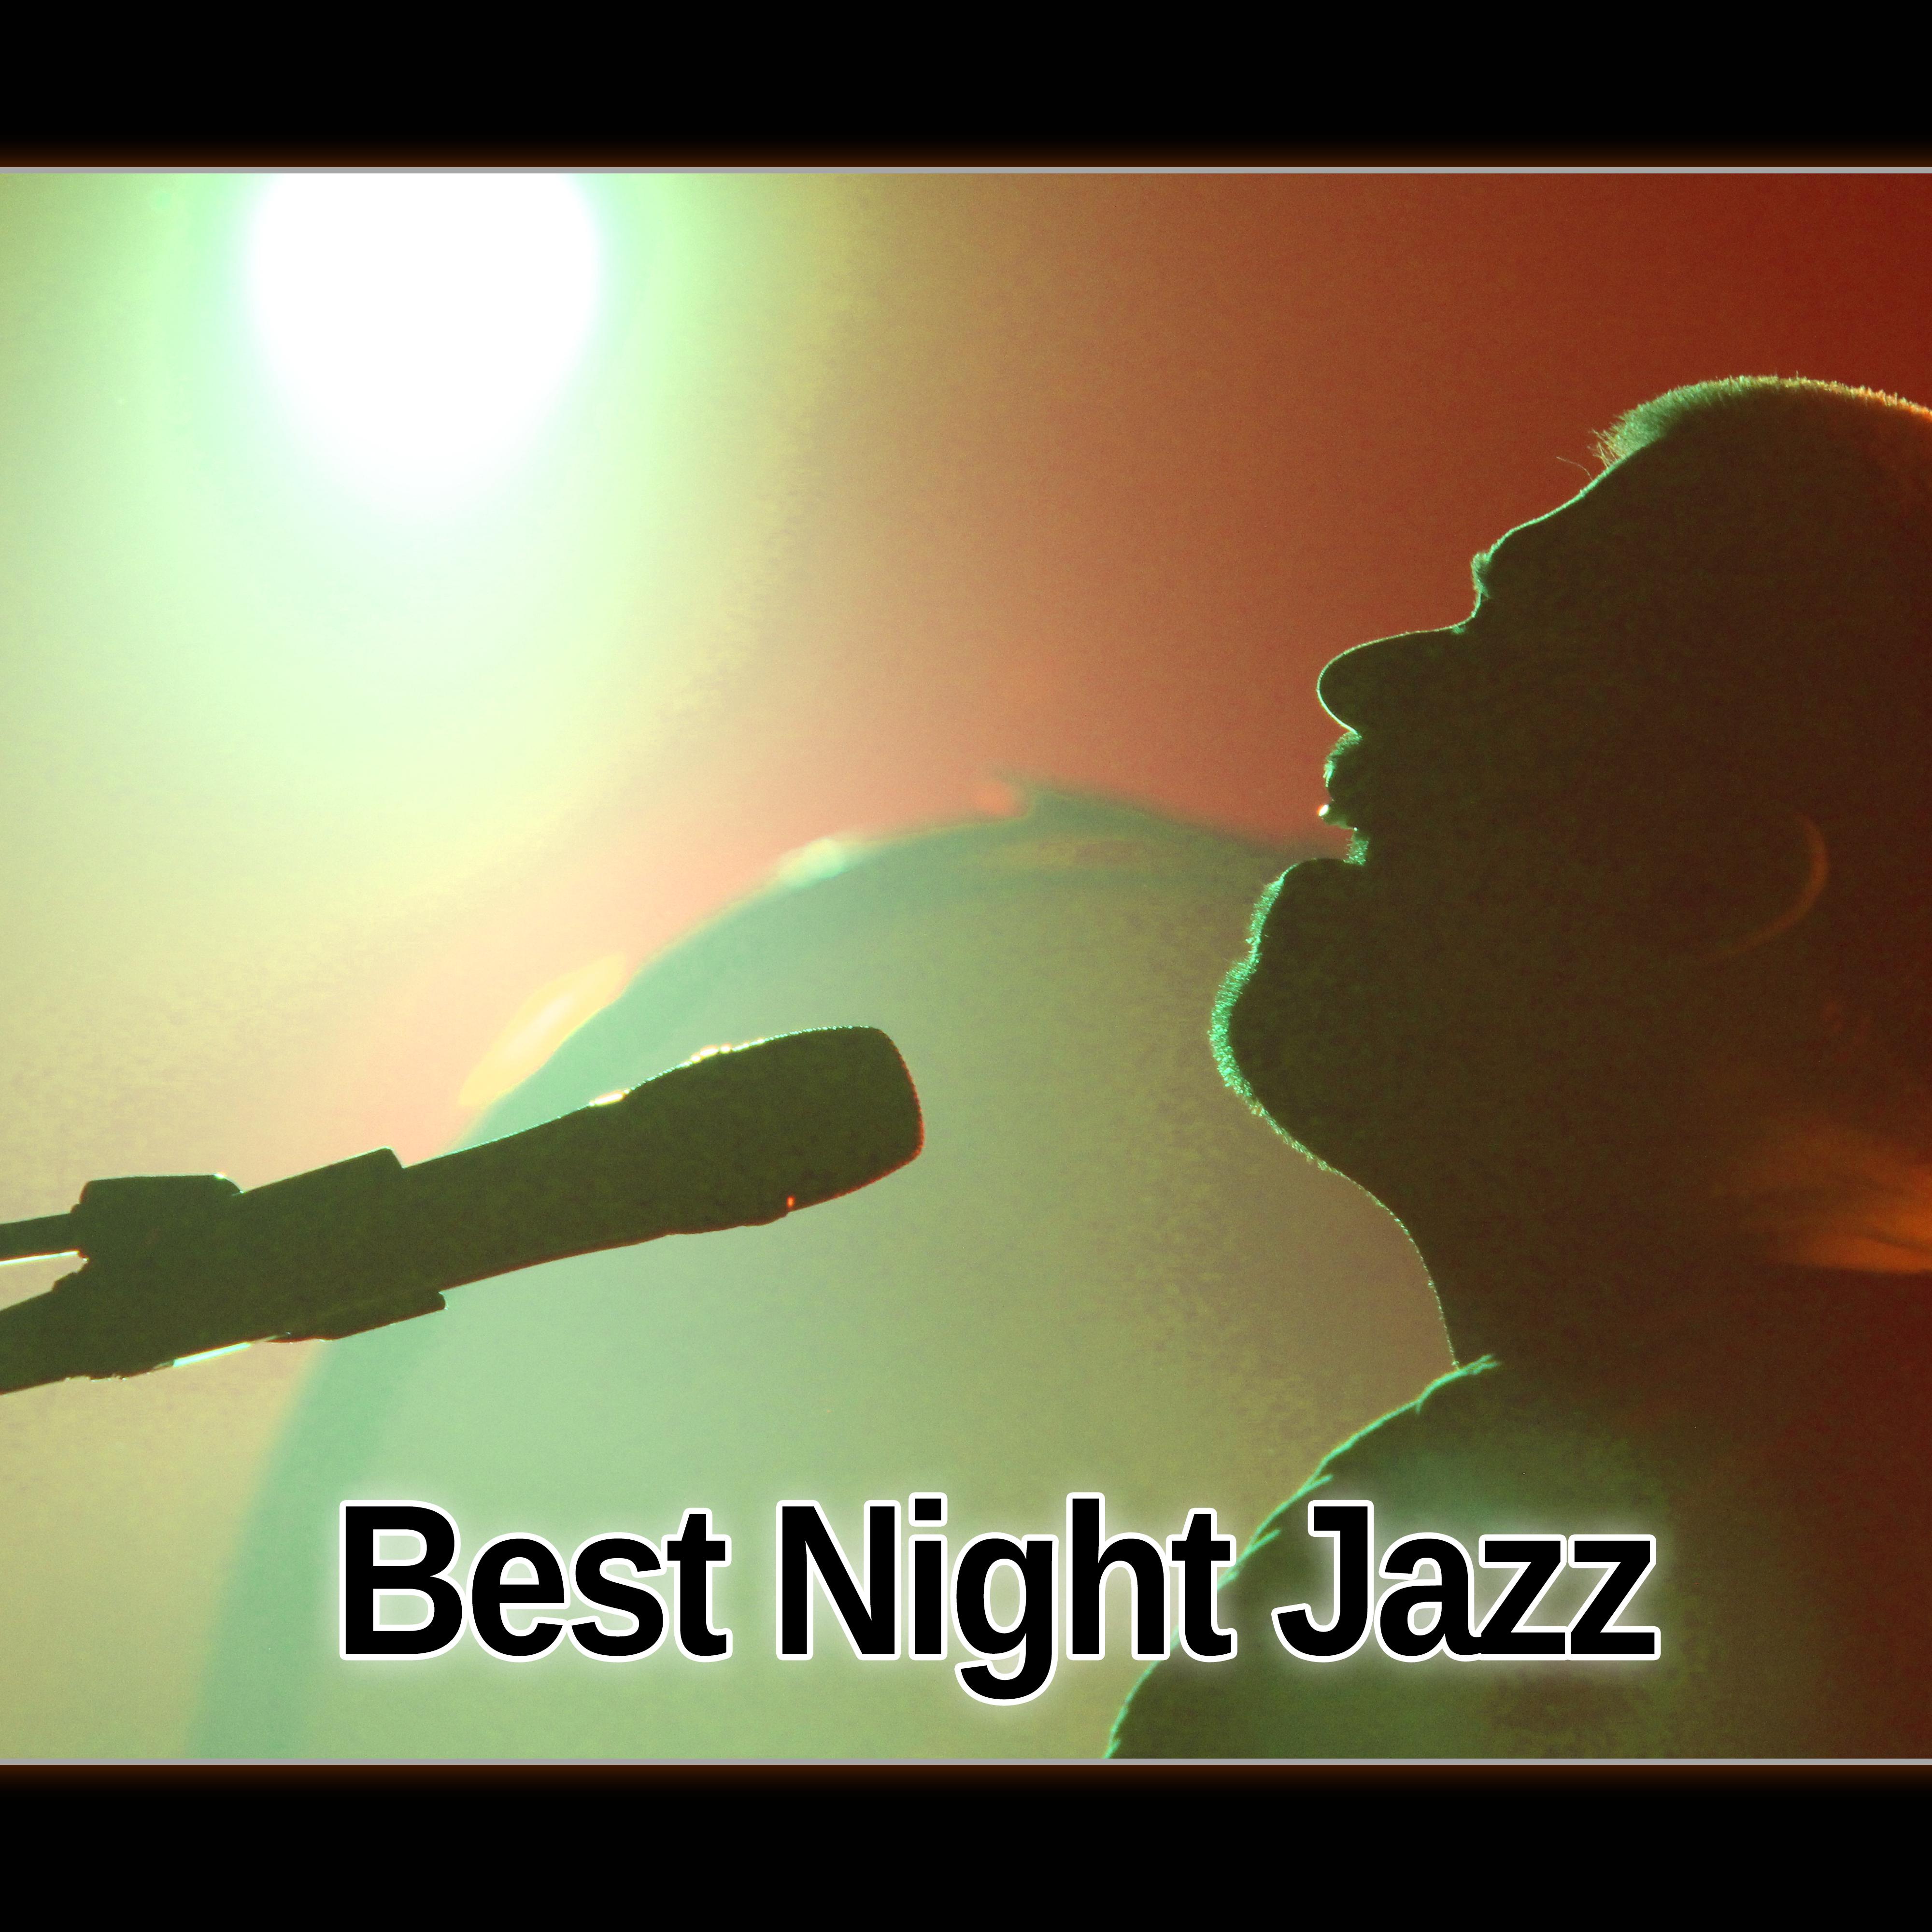 Best Night Jazz  Best Melow Jazz, Piano Bar, Jazz Night Music, Soothing Sounds